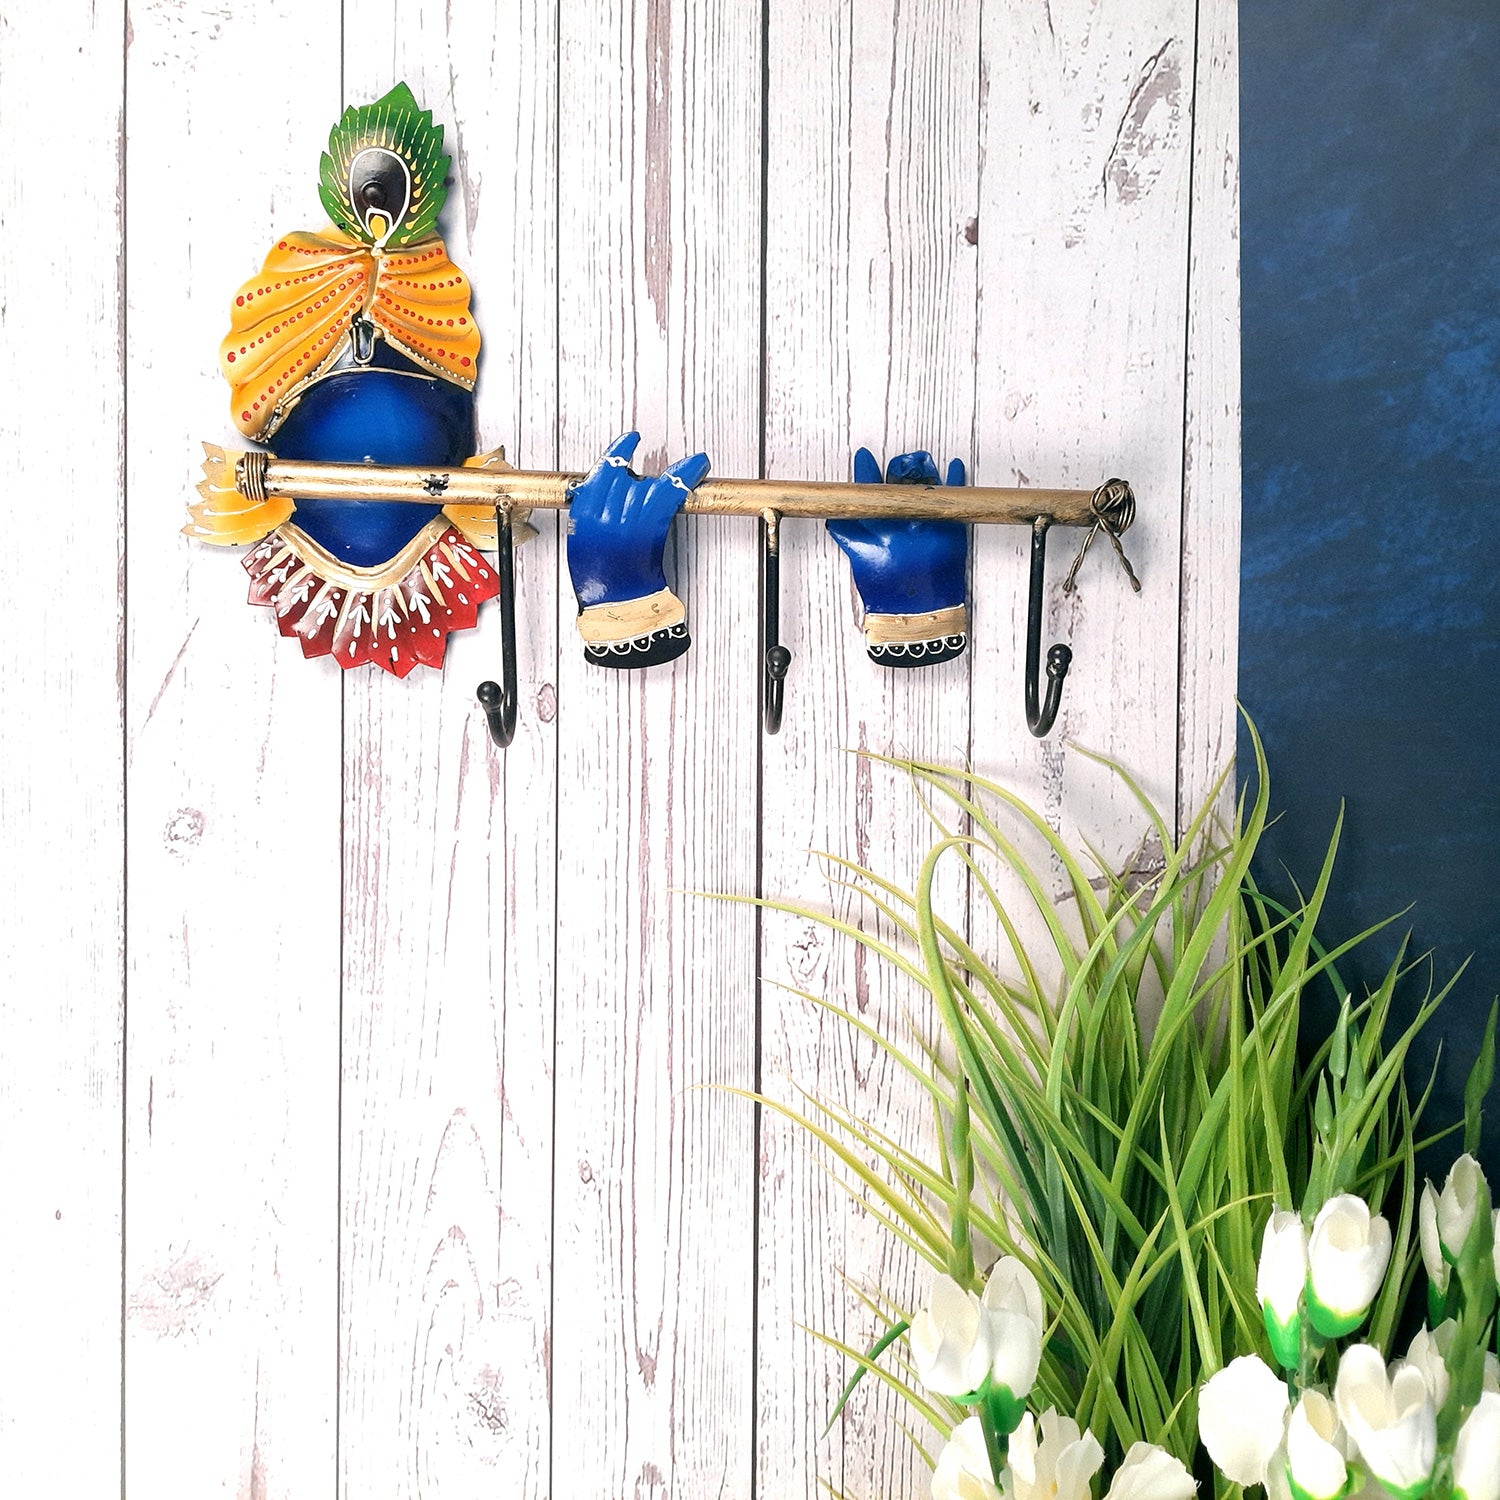 Key Hook Wall Hanging | Key Holder Stand - Krishna Design | Key Hanger Organiser - For Home, Entrance, Office Decor & Gifts - 13 Inch (3 Hooks)